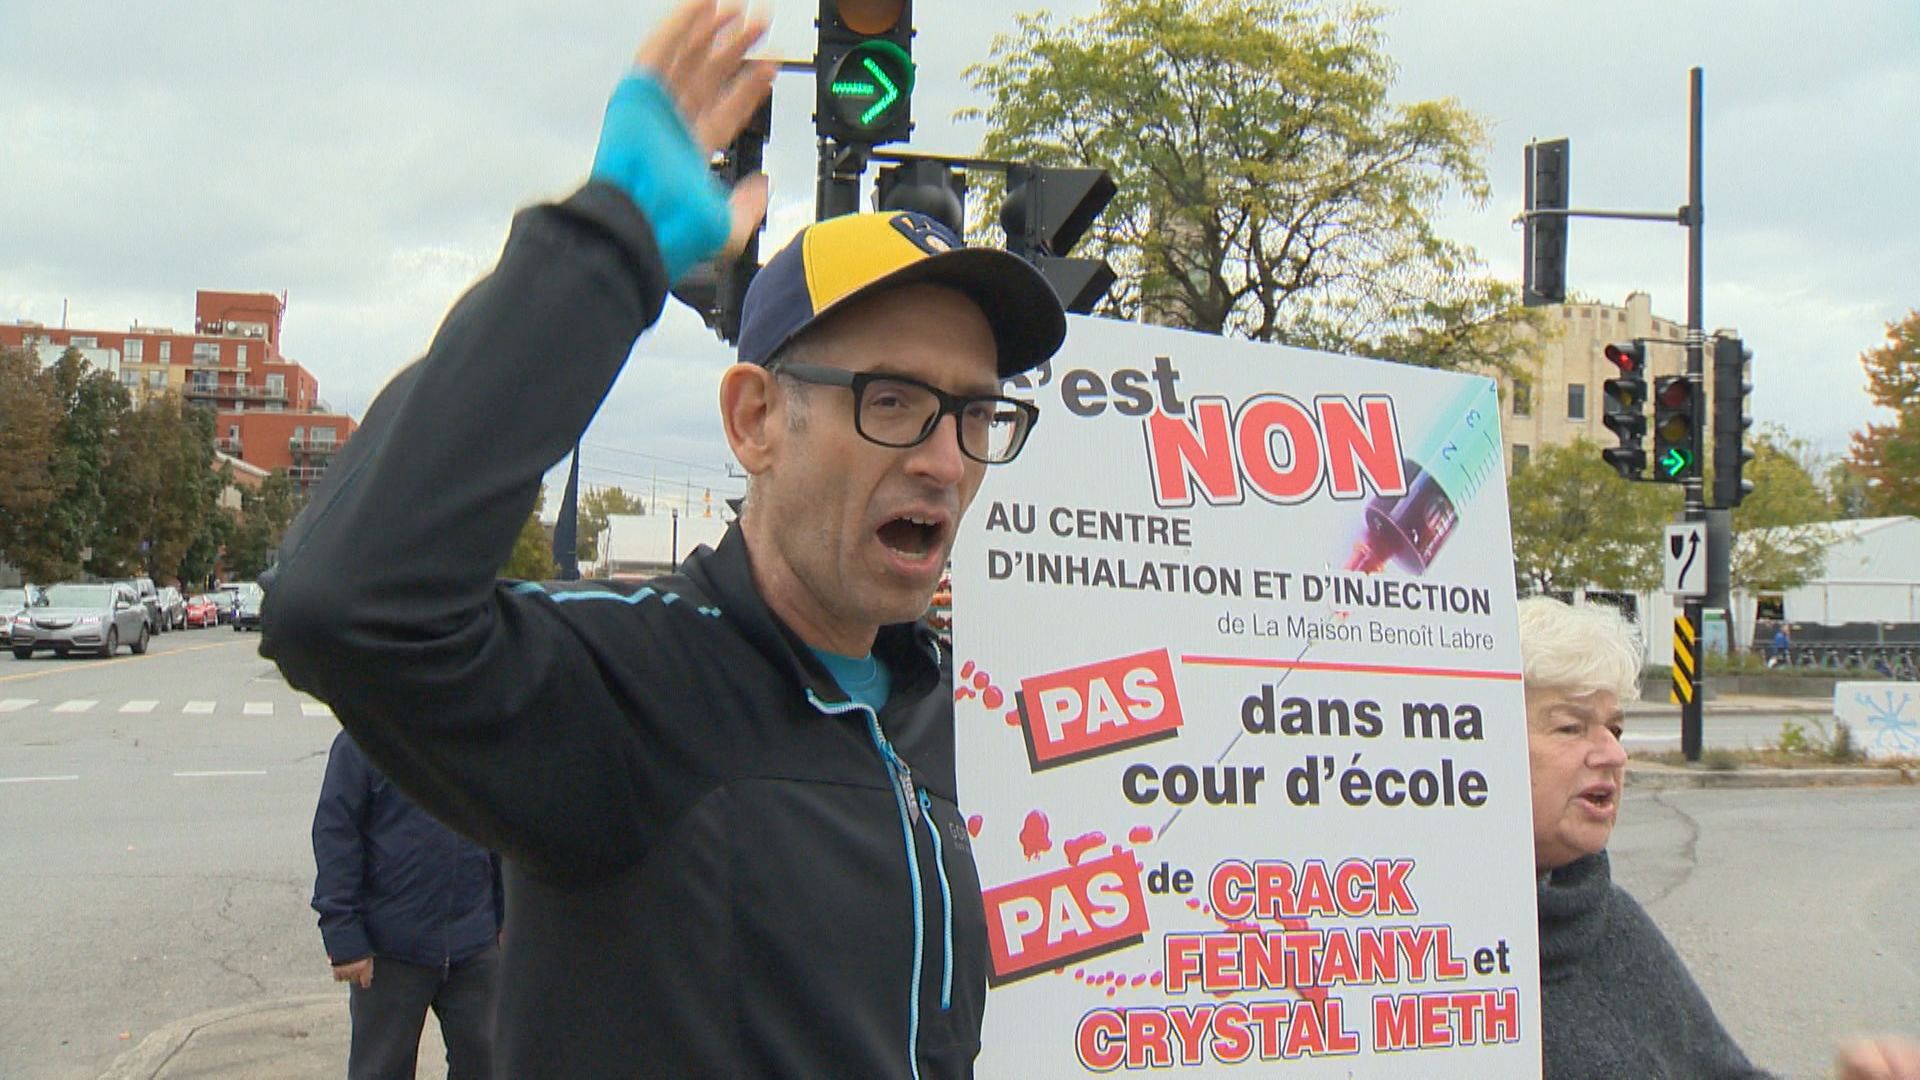 Montreal’s St-Henri residents still opposed to supervised drug site near elementary school